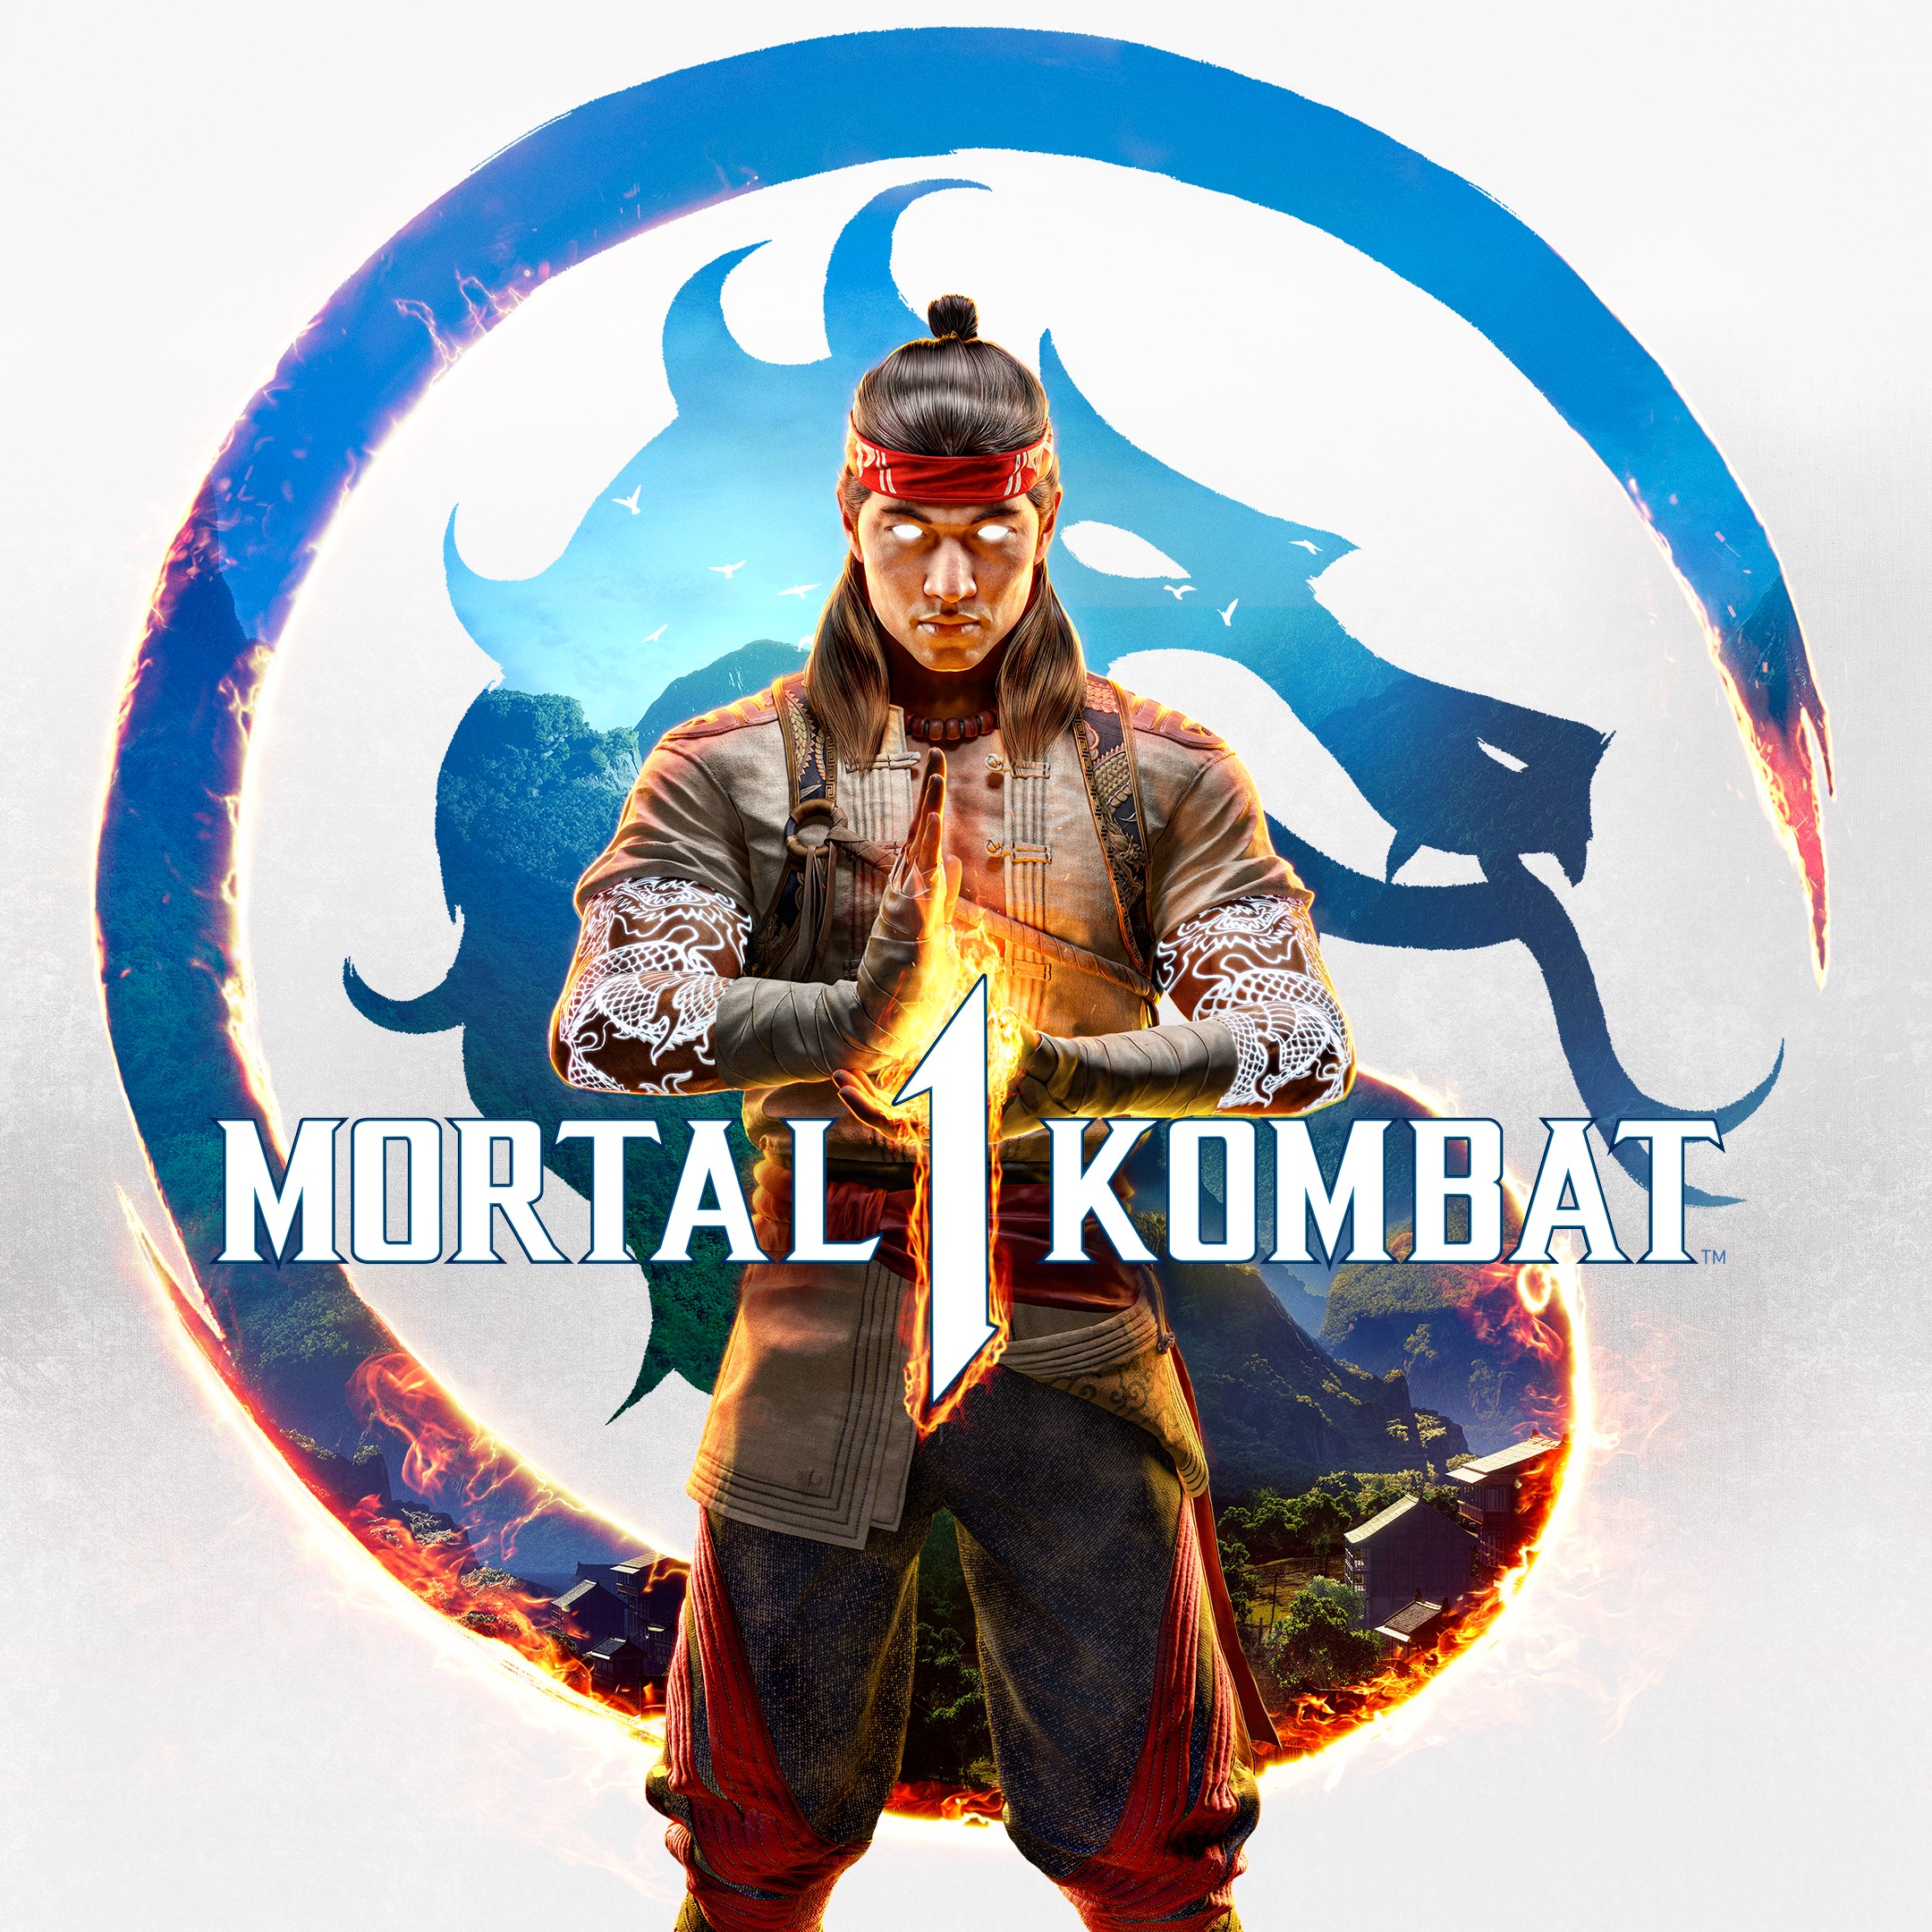 Mortal Kombat™1